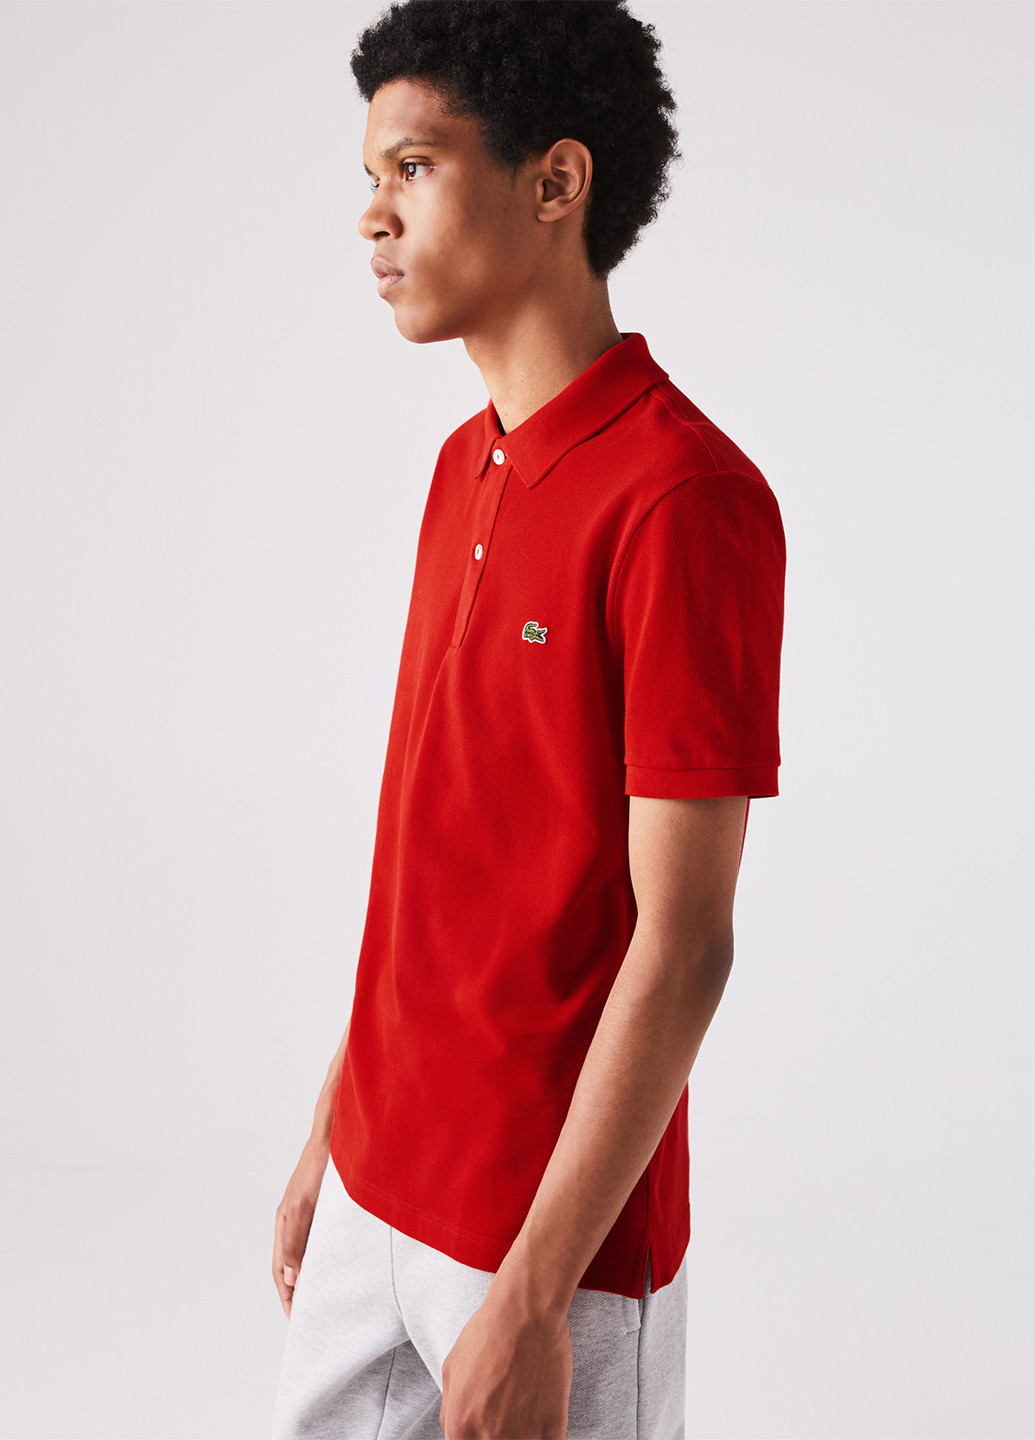 Красная футболка-поло для мужчин Lacoste с логотипом